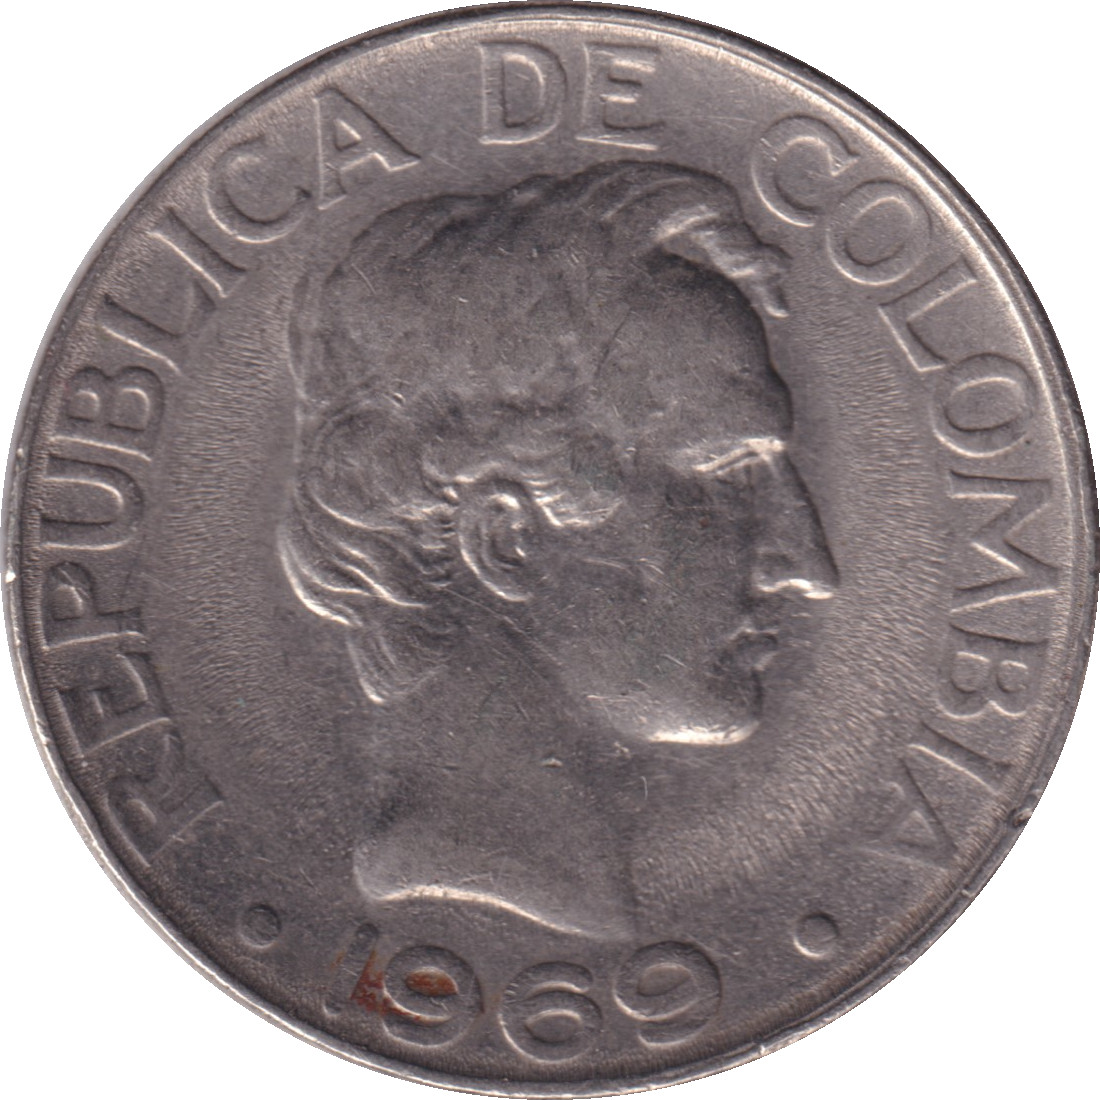 20 centavos - Santander - Grande tête